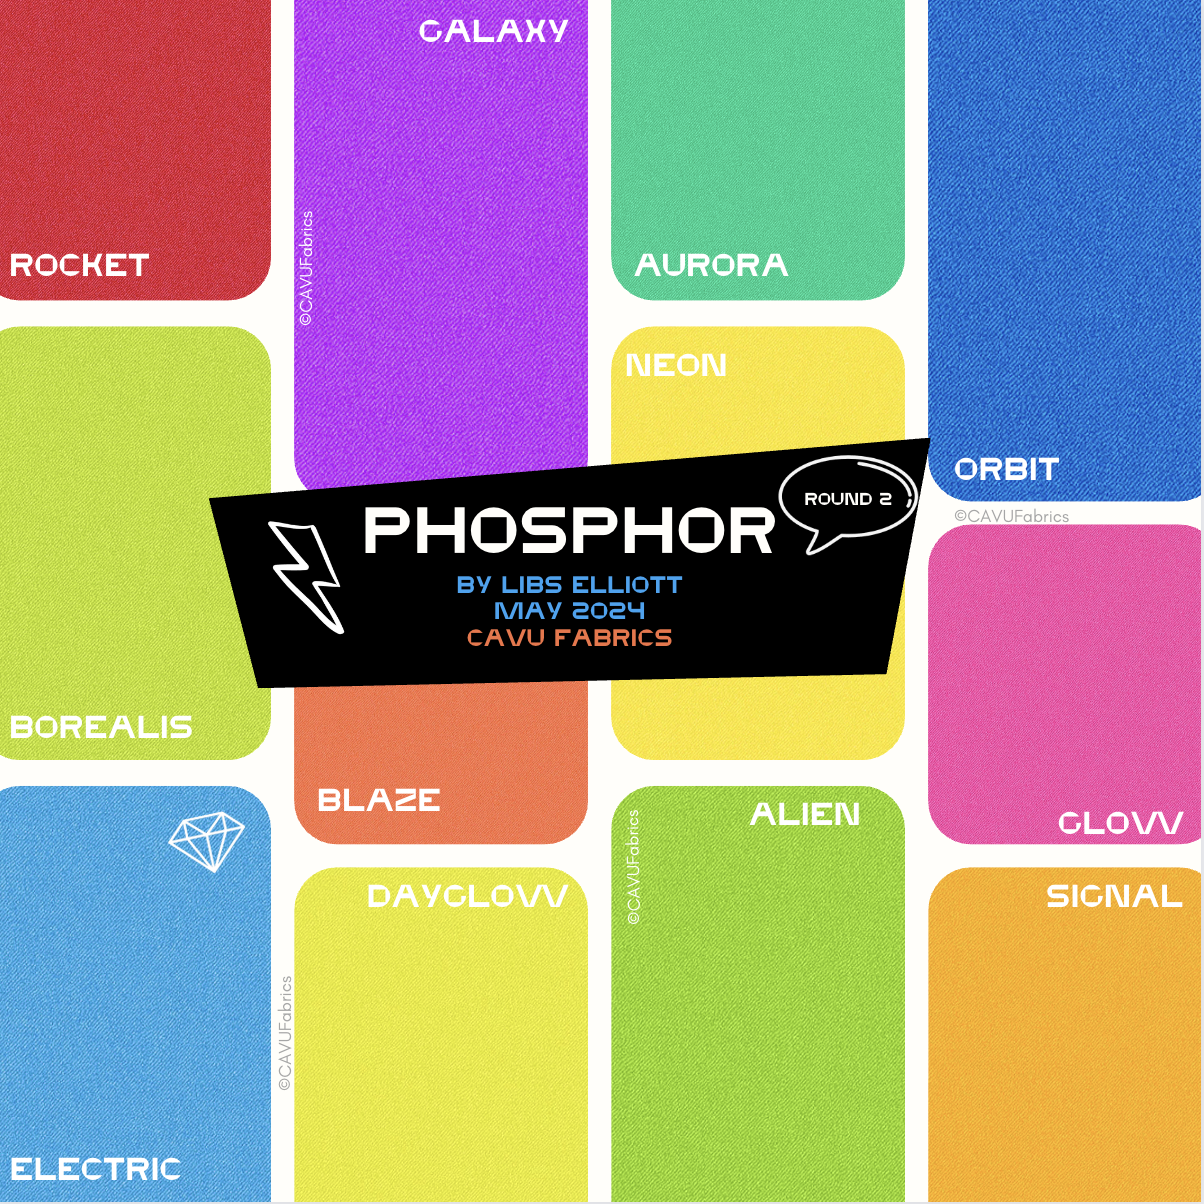 Orbit - Phosphor by Libs Elliott